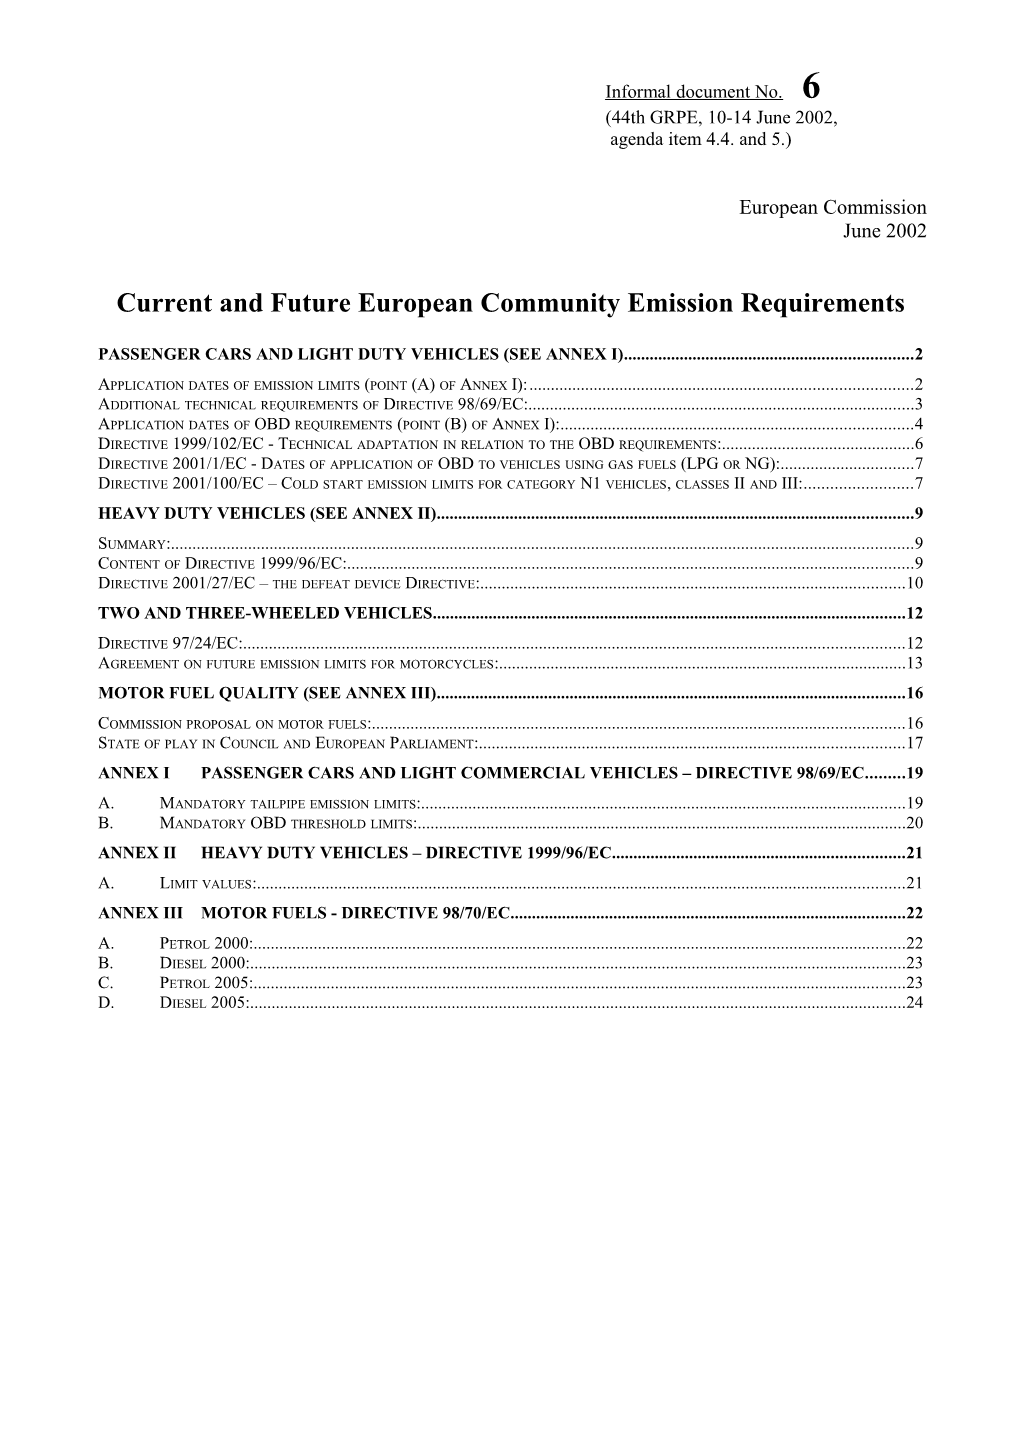 Future European Community Emission Requirements